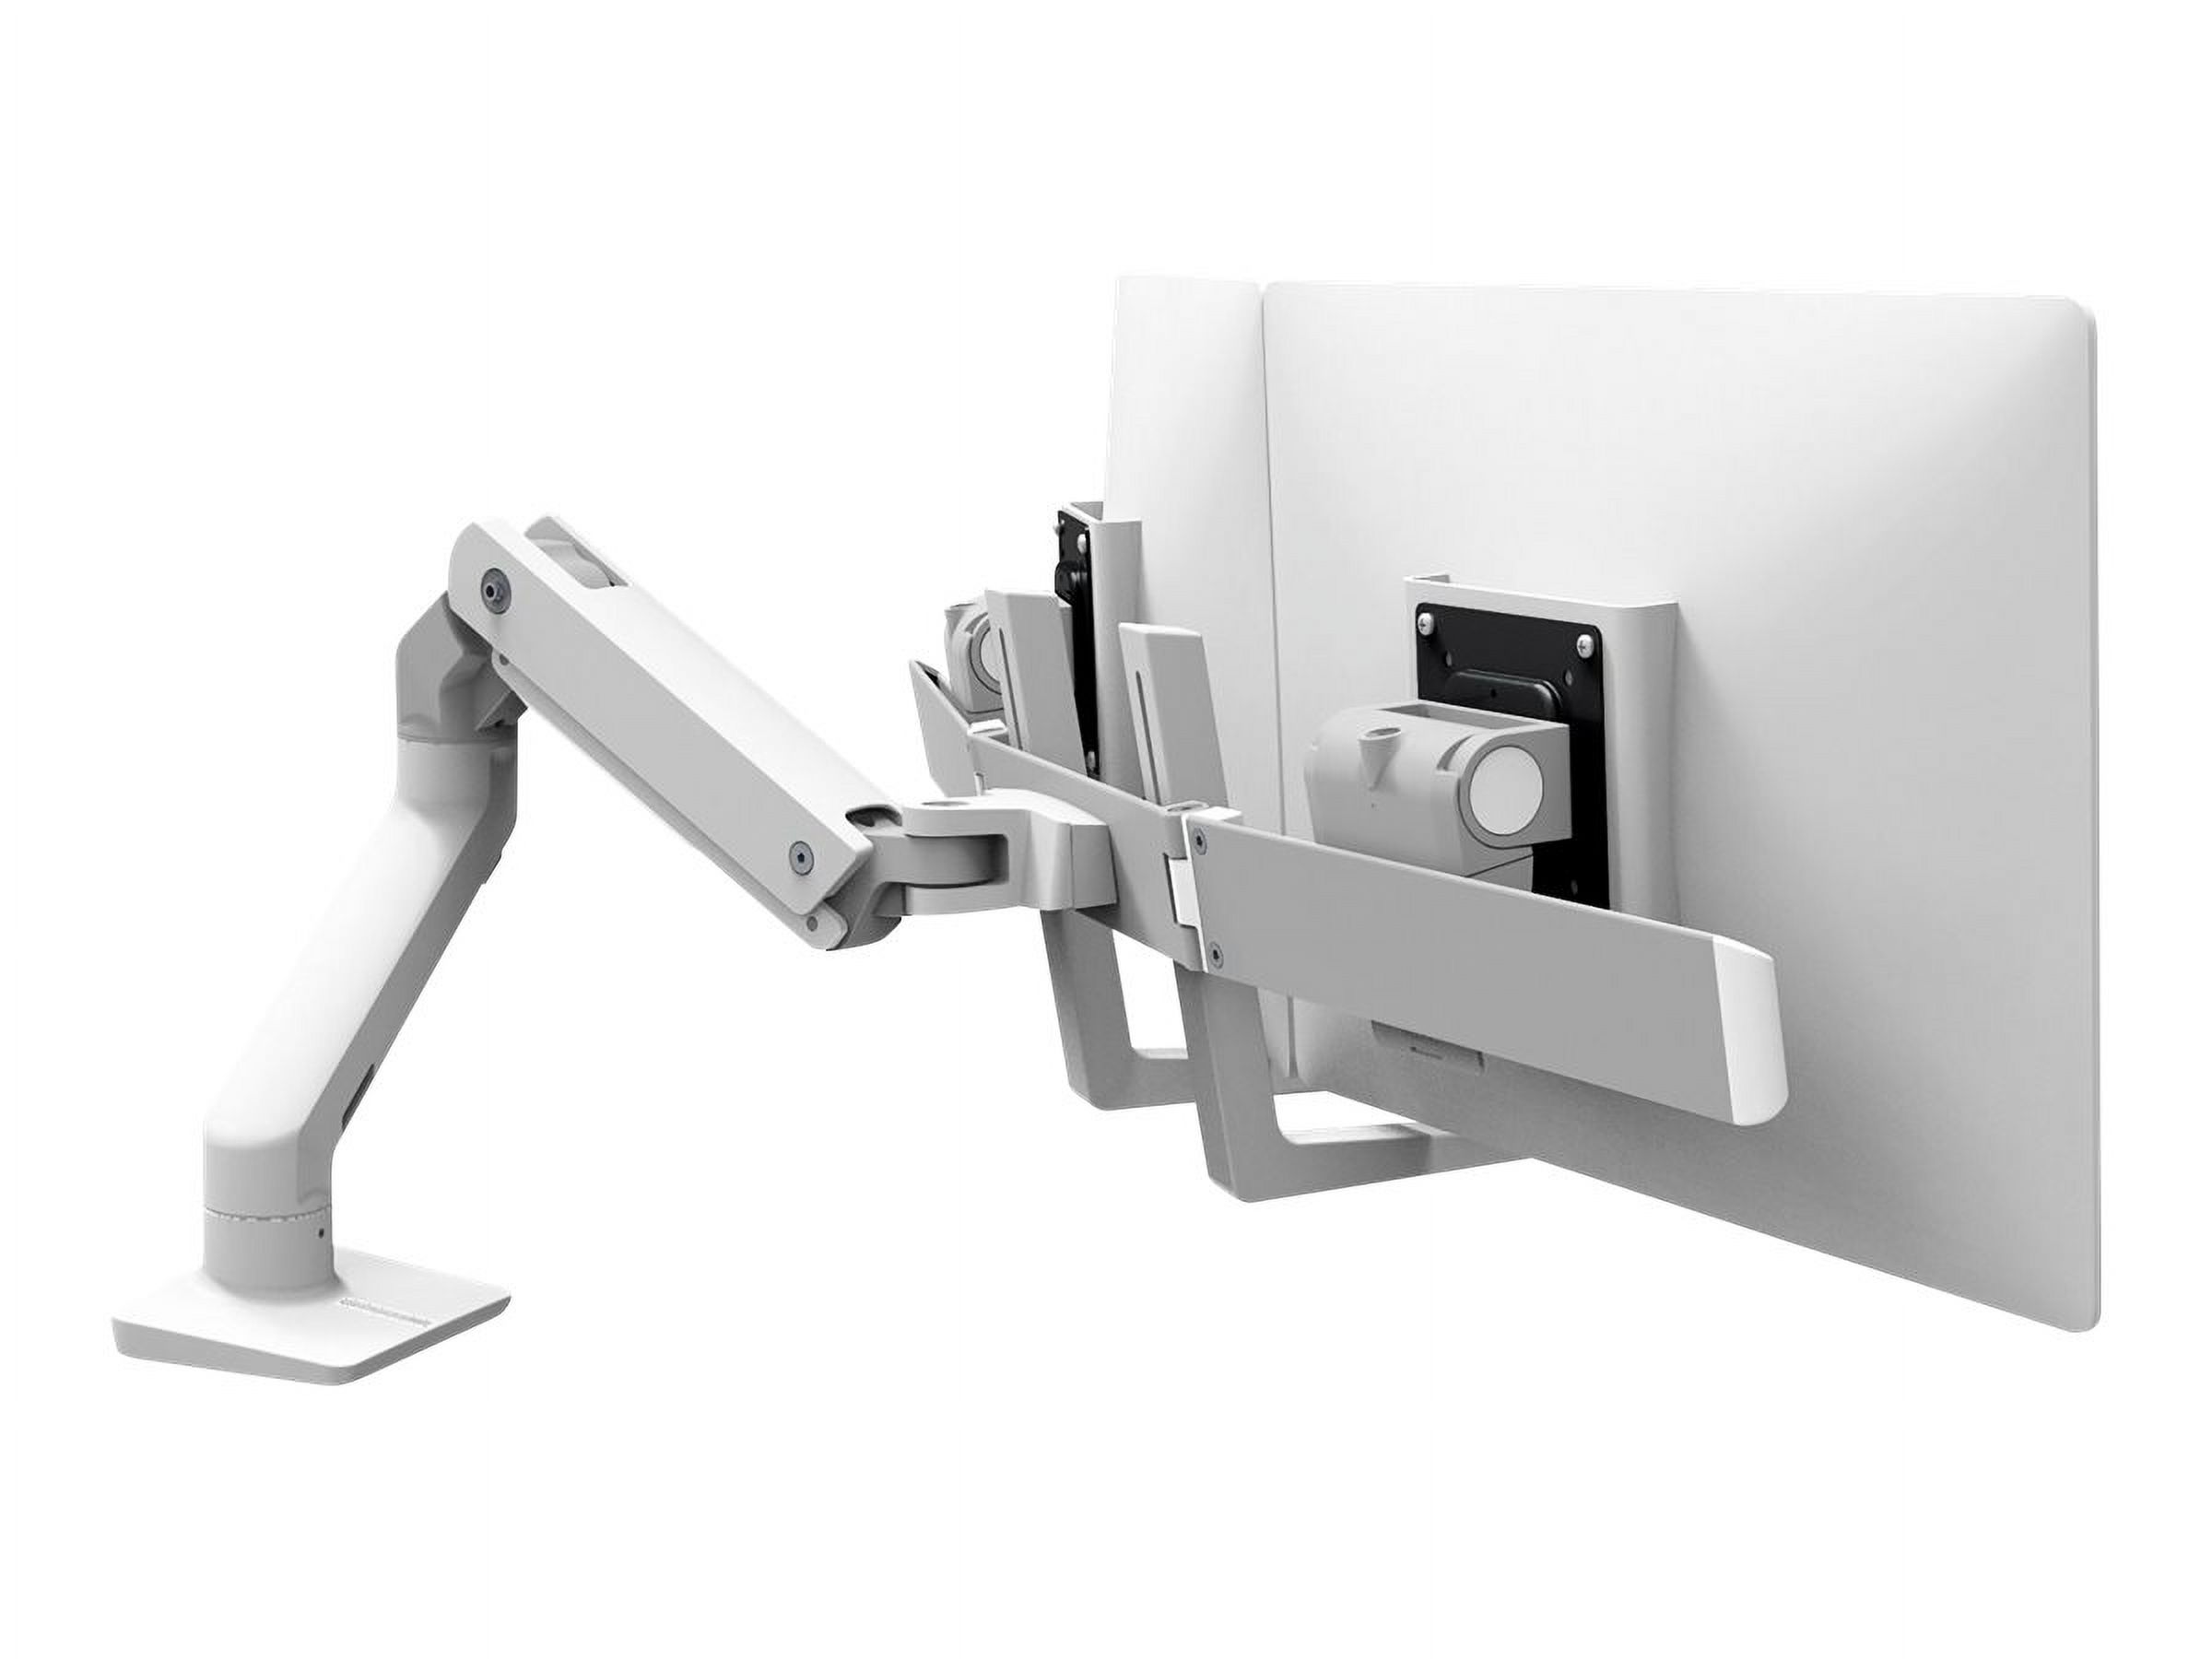 Ergotron 45-476-216 HX Desk Dual Monitor Arm Mounting Kit, Bright White - image 4 of 10